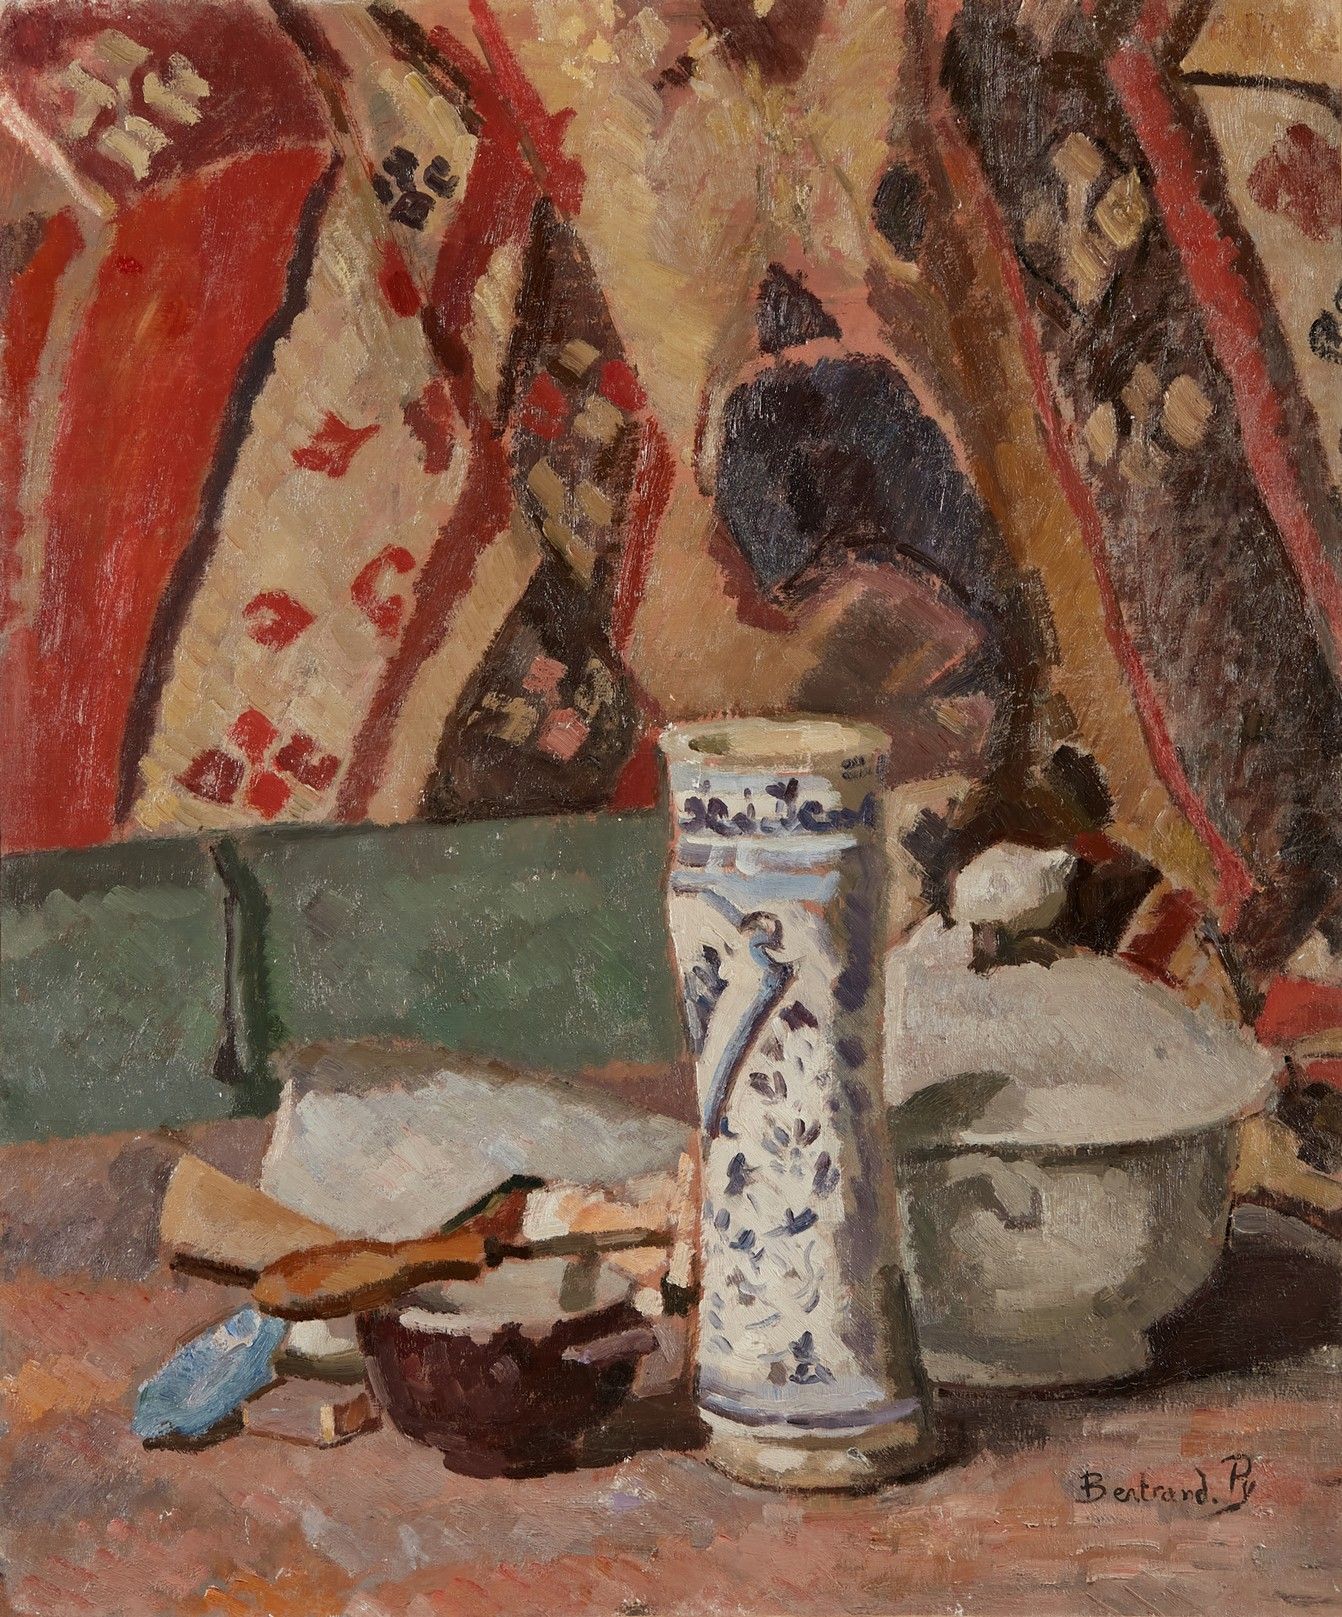 Bertrand py 伯特兰-PY（1895-1973年）

阿尔巴雷洛和陶器汤杯

布面油画，右下角有签名

65 x 54 cm